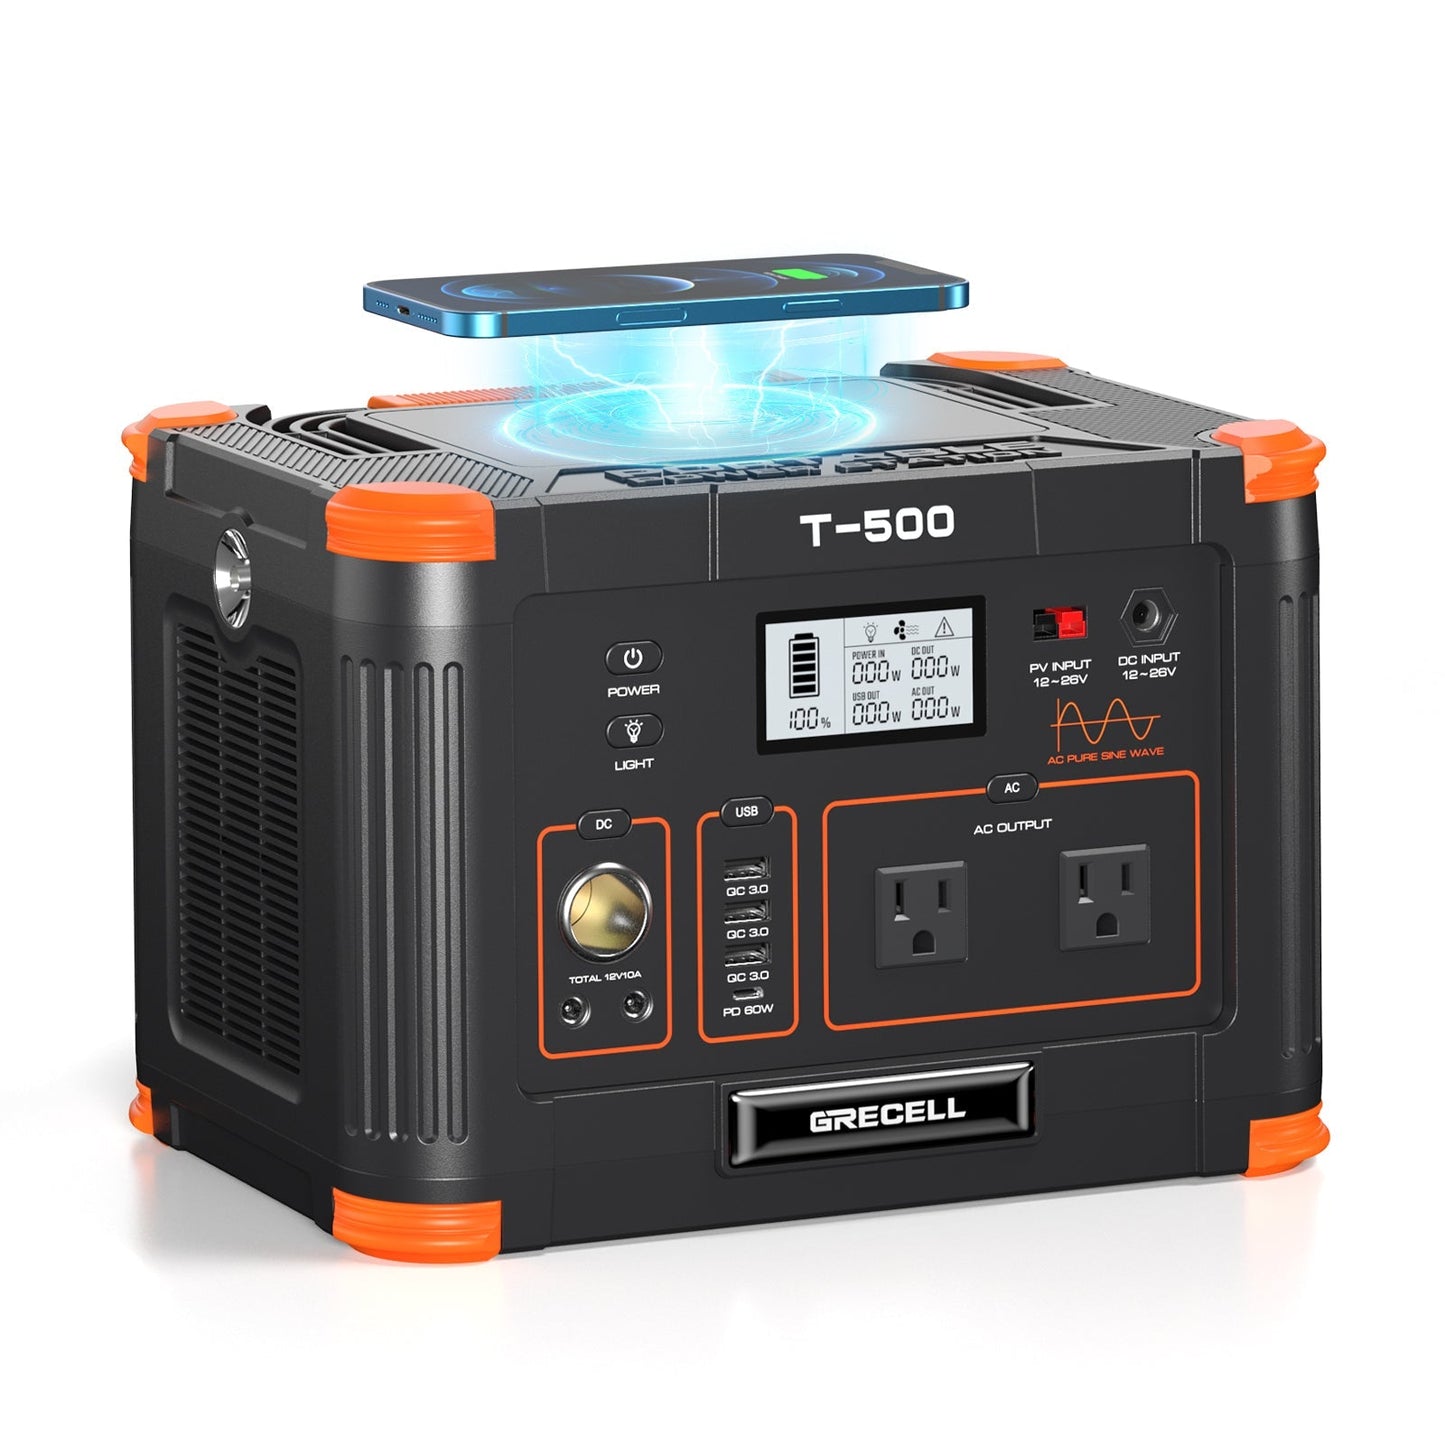 S5000: Most Versatile Portable Home Battery